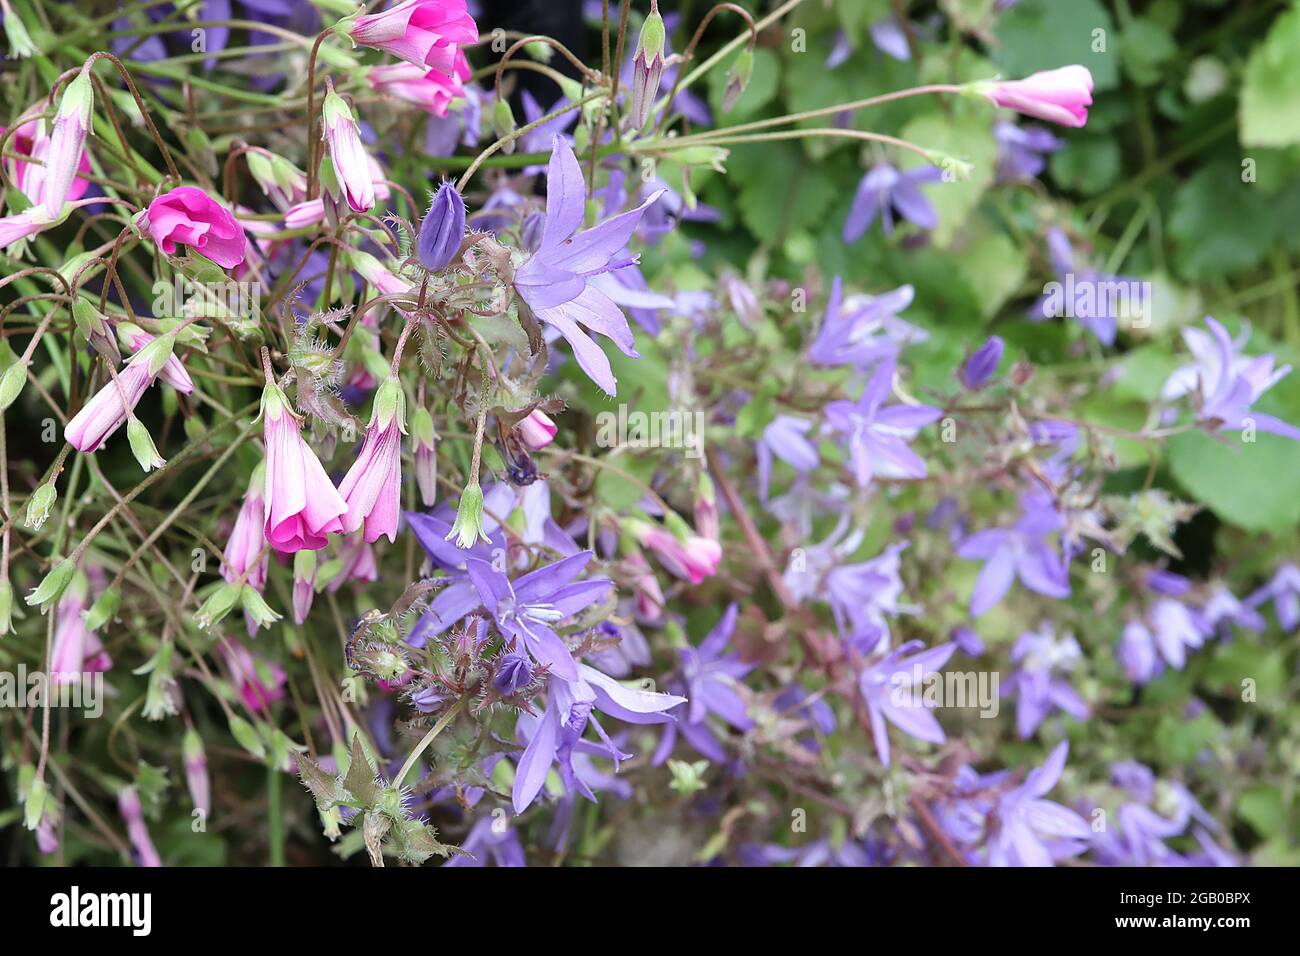 Campanula portenschlagiana ‘Get Mee Purple’ Dalmatian bellflower Get Mee Purple – flared open bell-shaped pale violet blue flowers,  June, England, UK Stock Photo